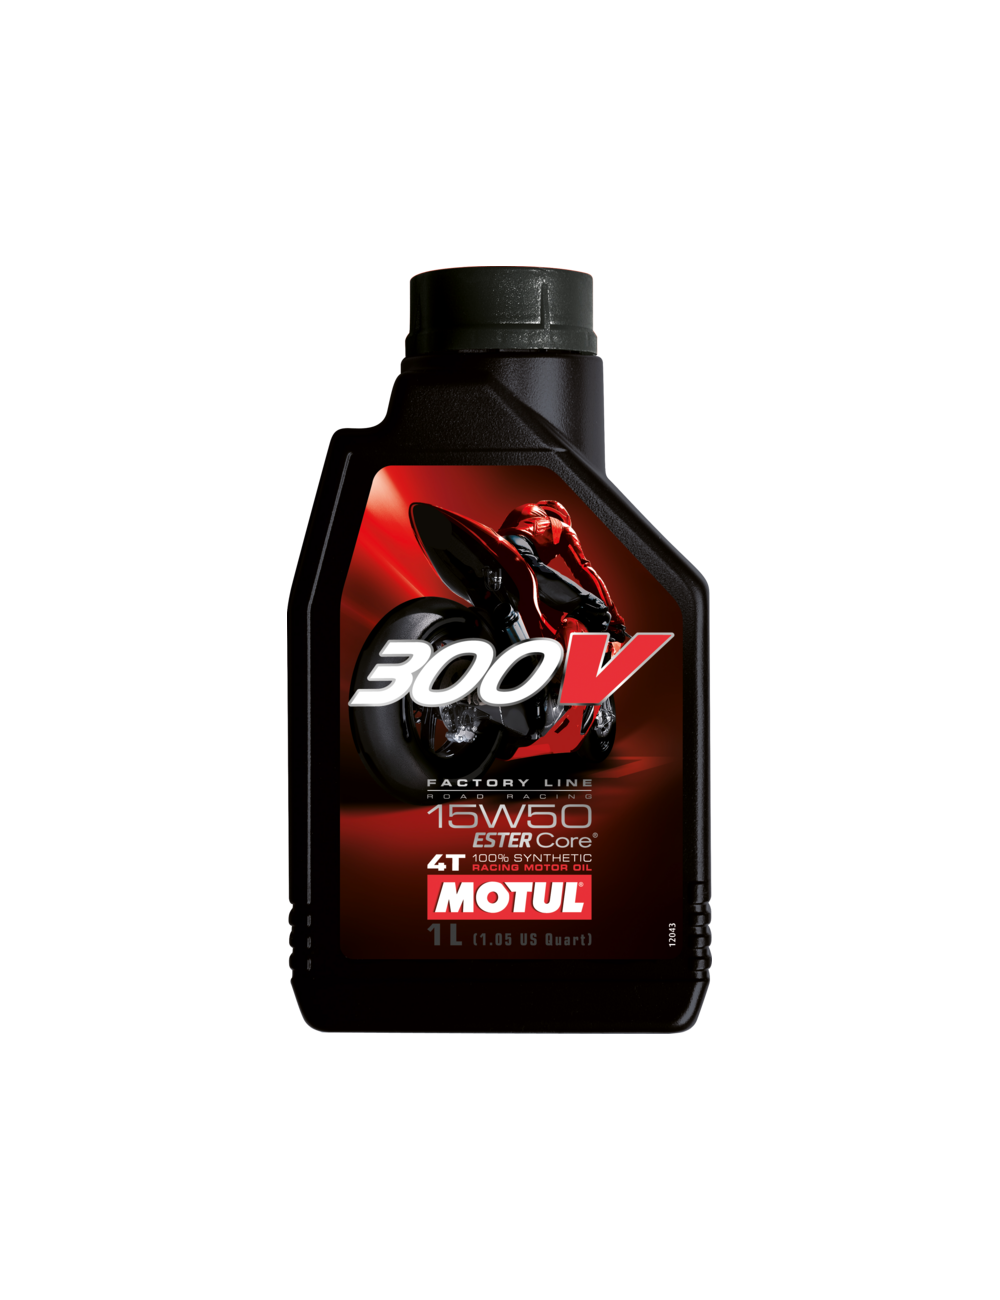 Motul 300V Factory Line Road Racing 15W50